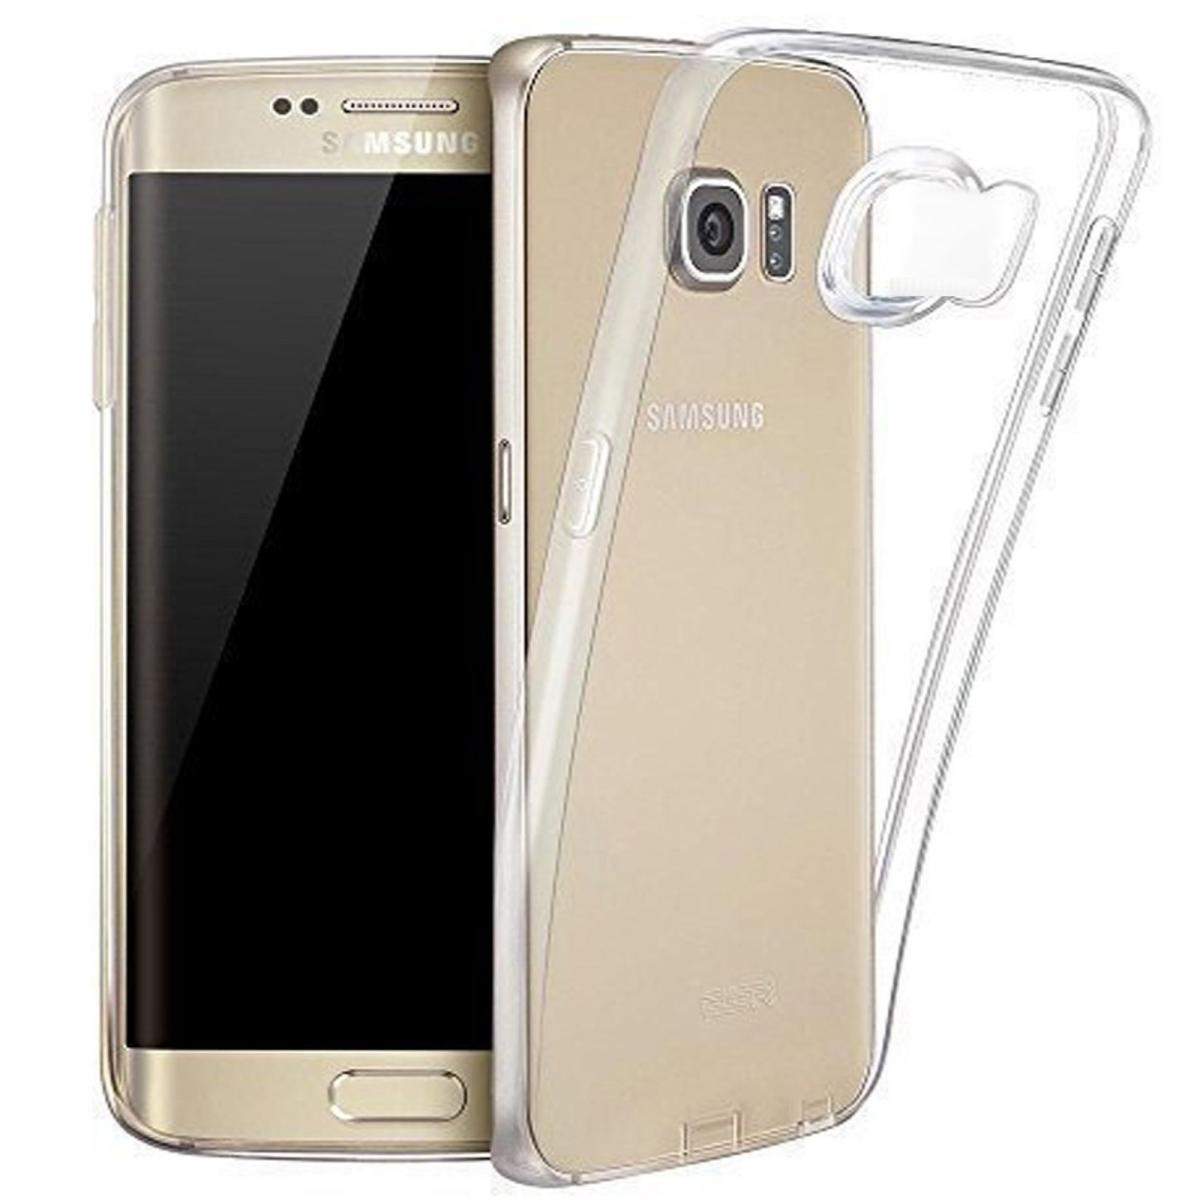 chasquido Corrupto Implementar Funda de gel TPU carcasa silicona para movil Samsung Galaxy S6 Edge